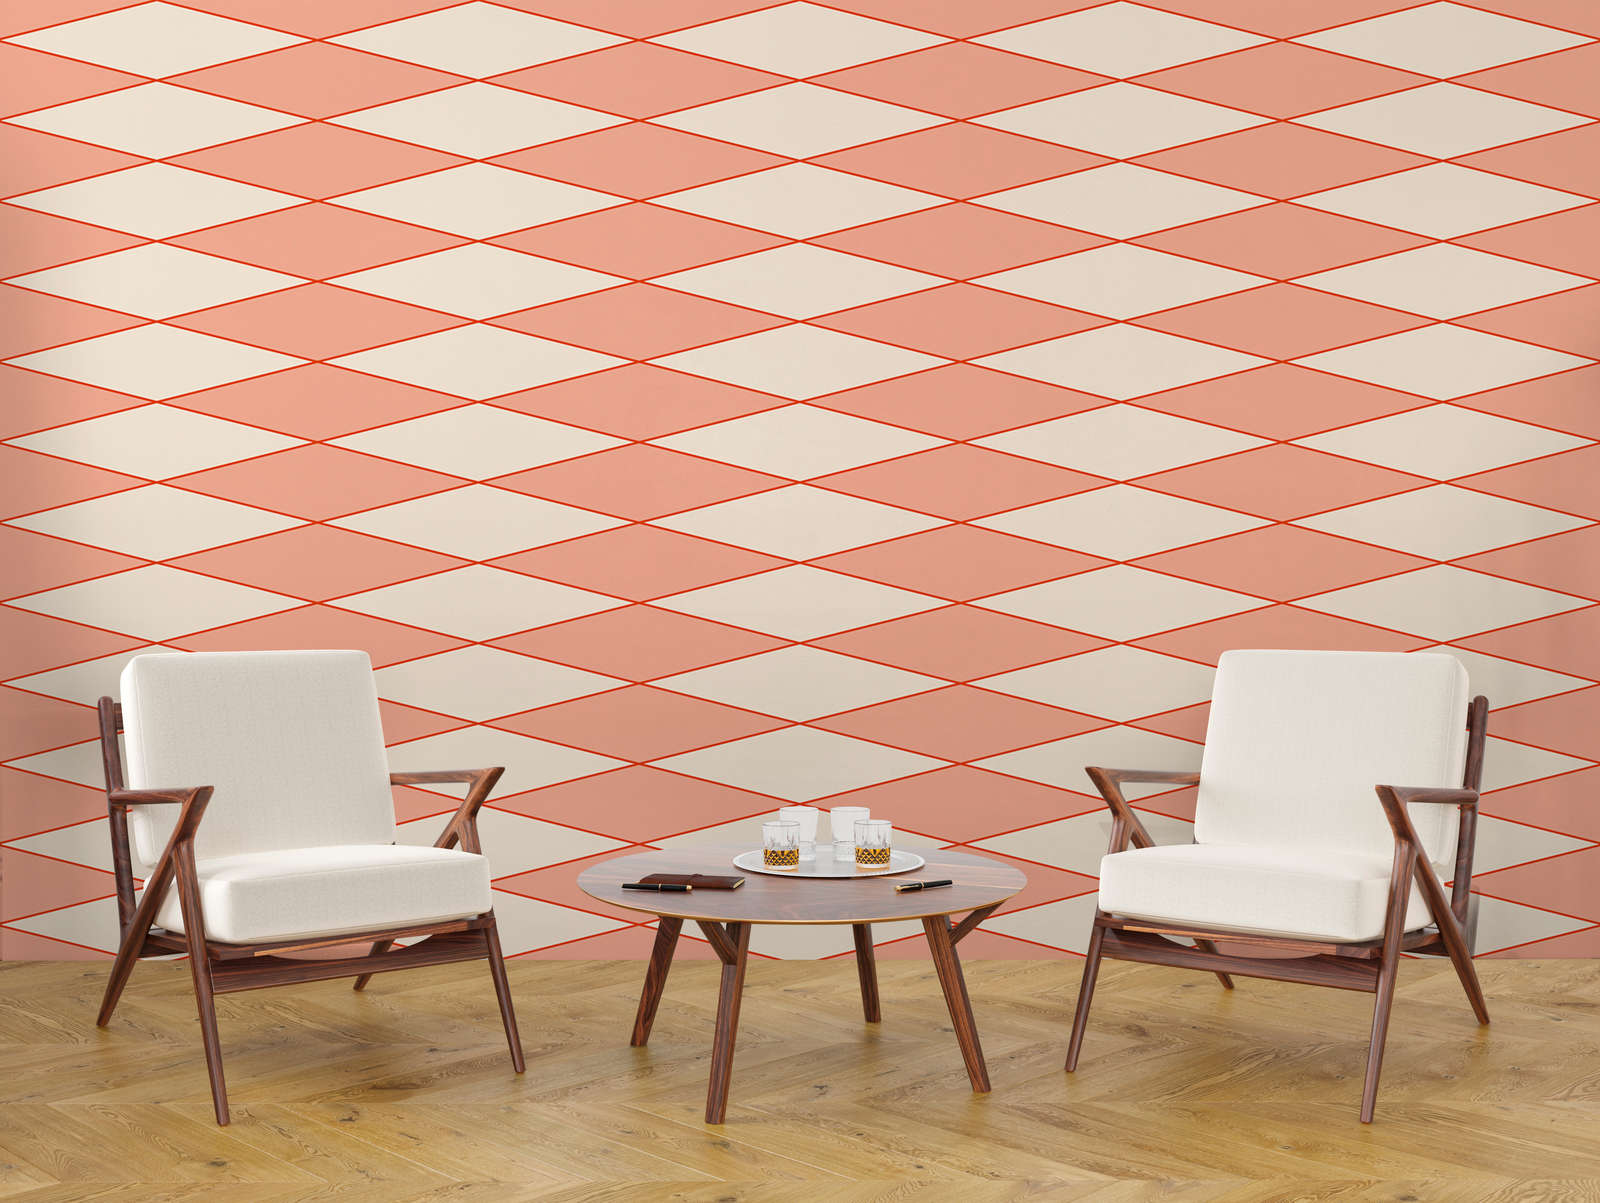             Wallpaper with diamonds & line pattern - Orange, Beige | Pearl smooth fleece
        